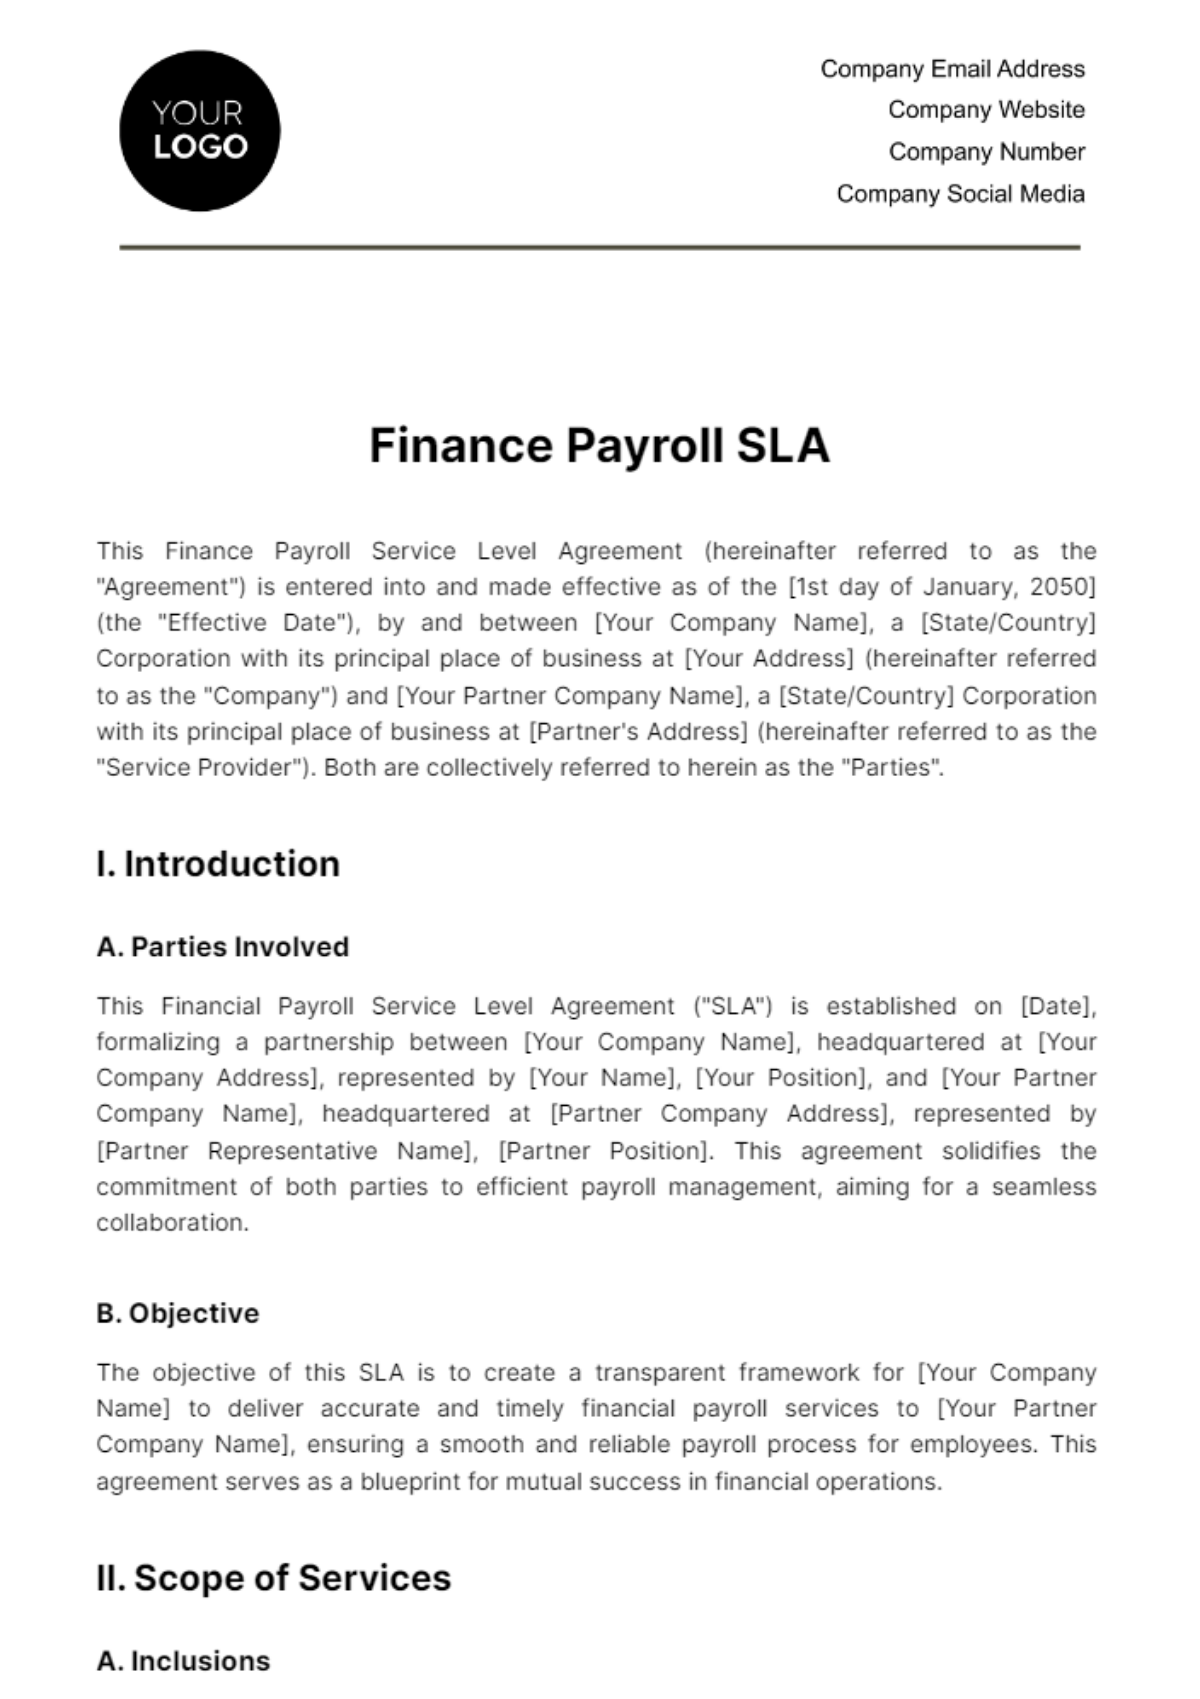 Finance Payroll SLA Template